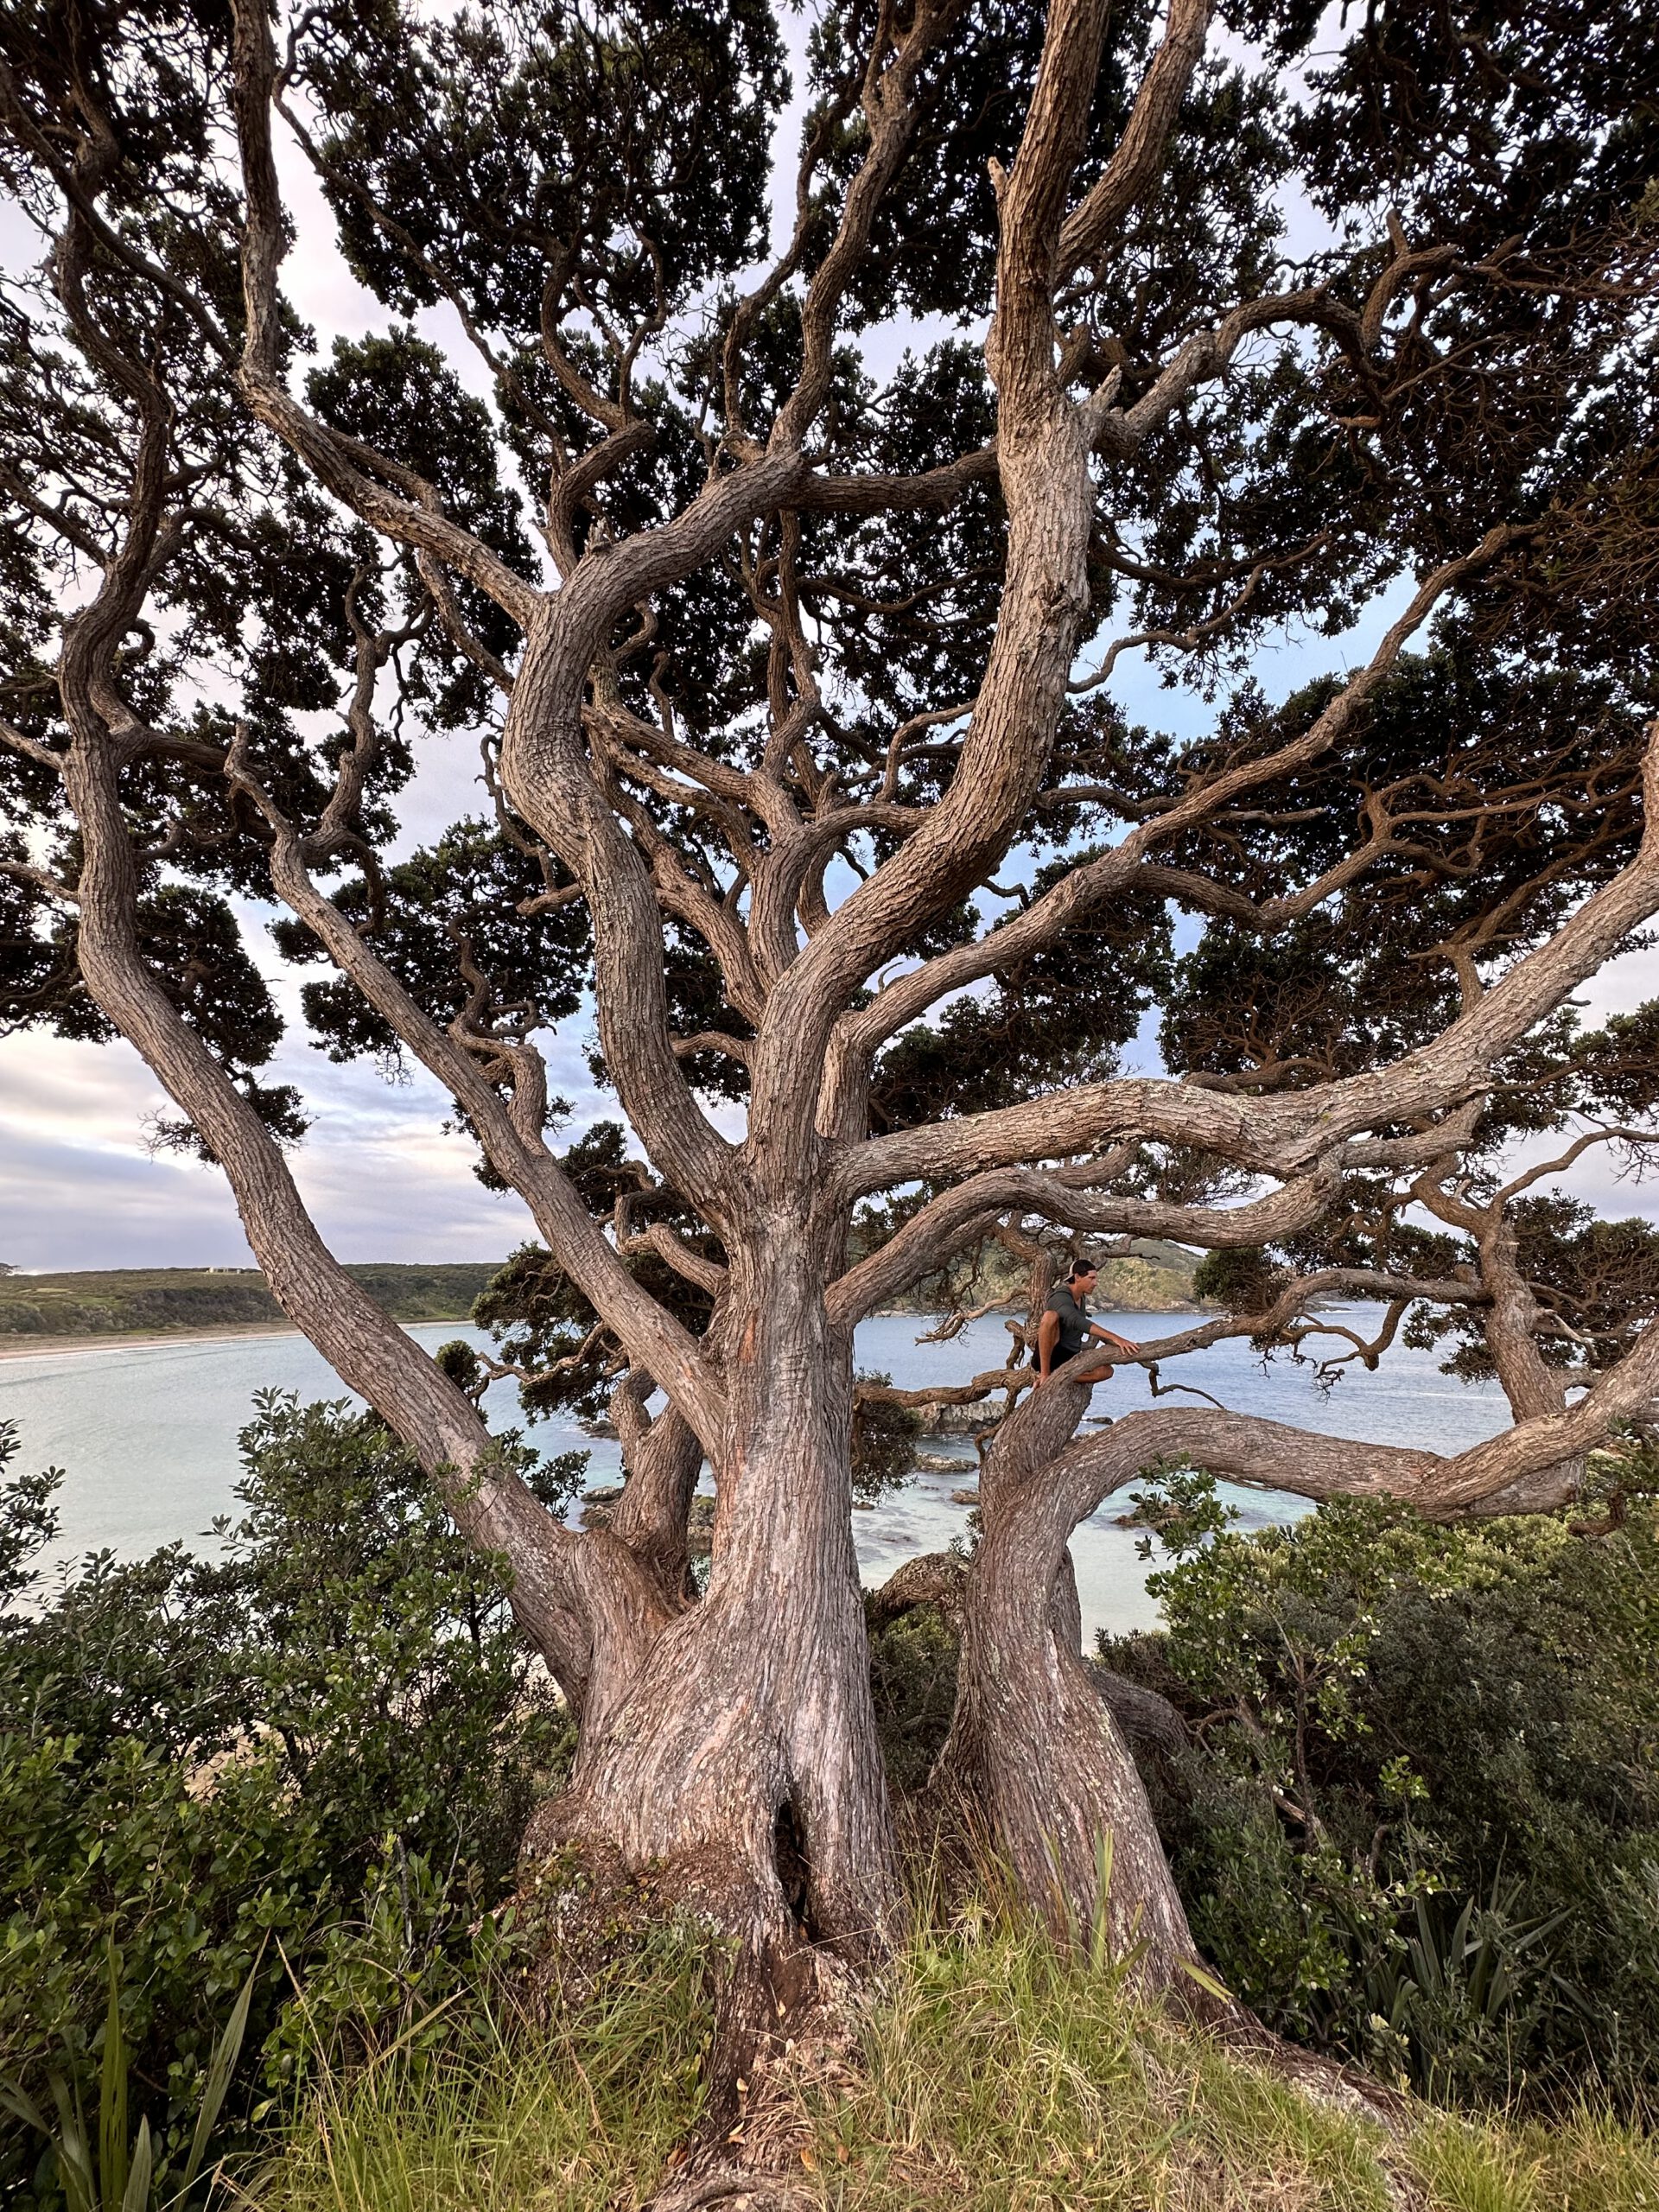 Climbing a giant tree over Mai Tai Bay on New Zealand's North Island